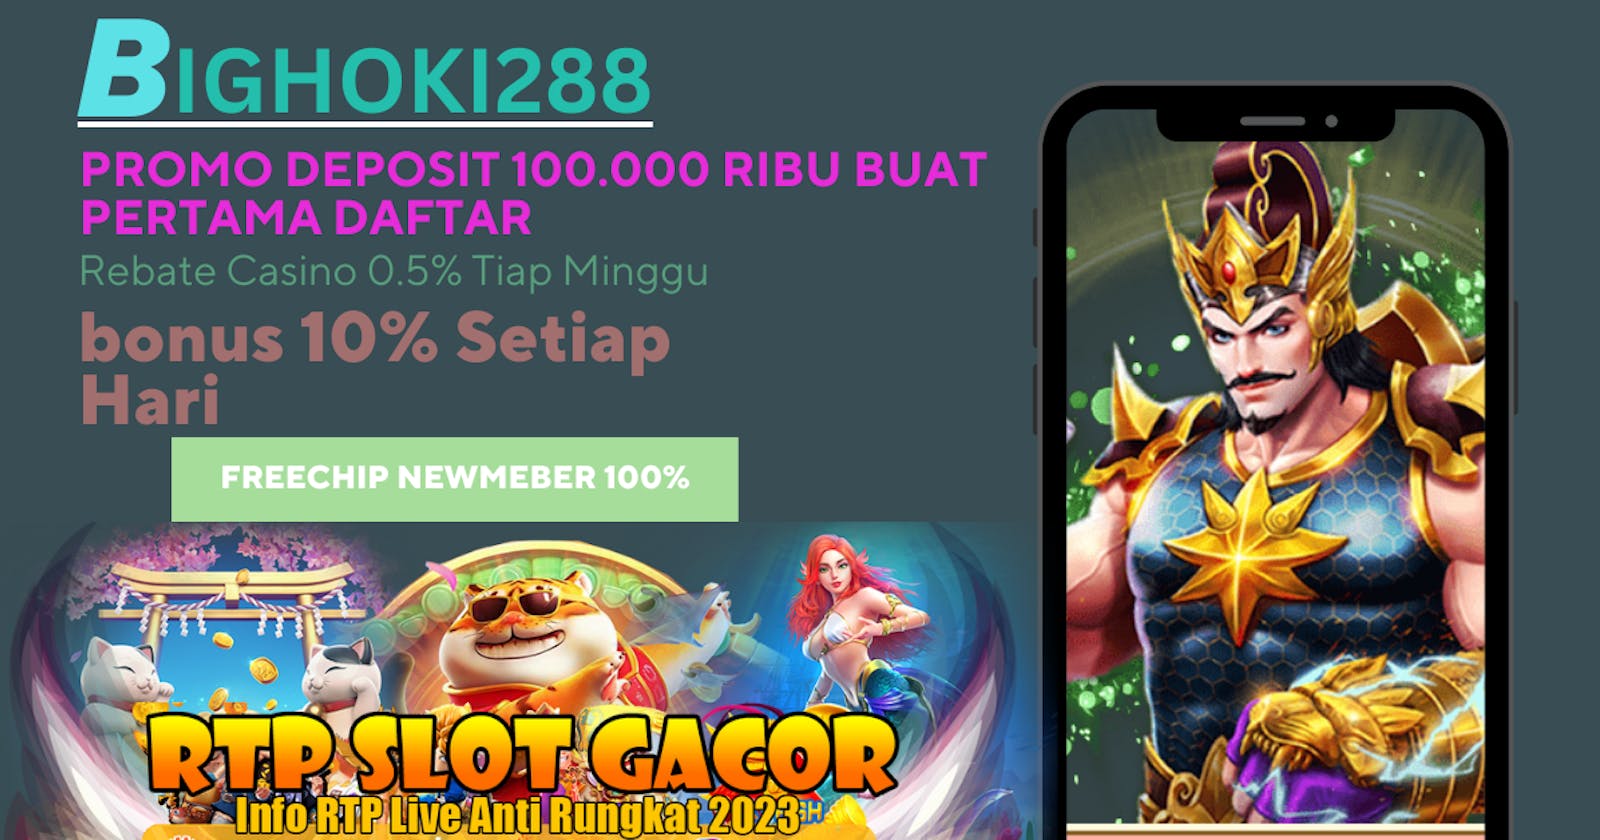 Pola Gacor Rtp Slot Online Anti Rungkat 2023 - Bighoki288